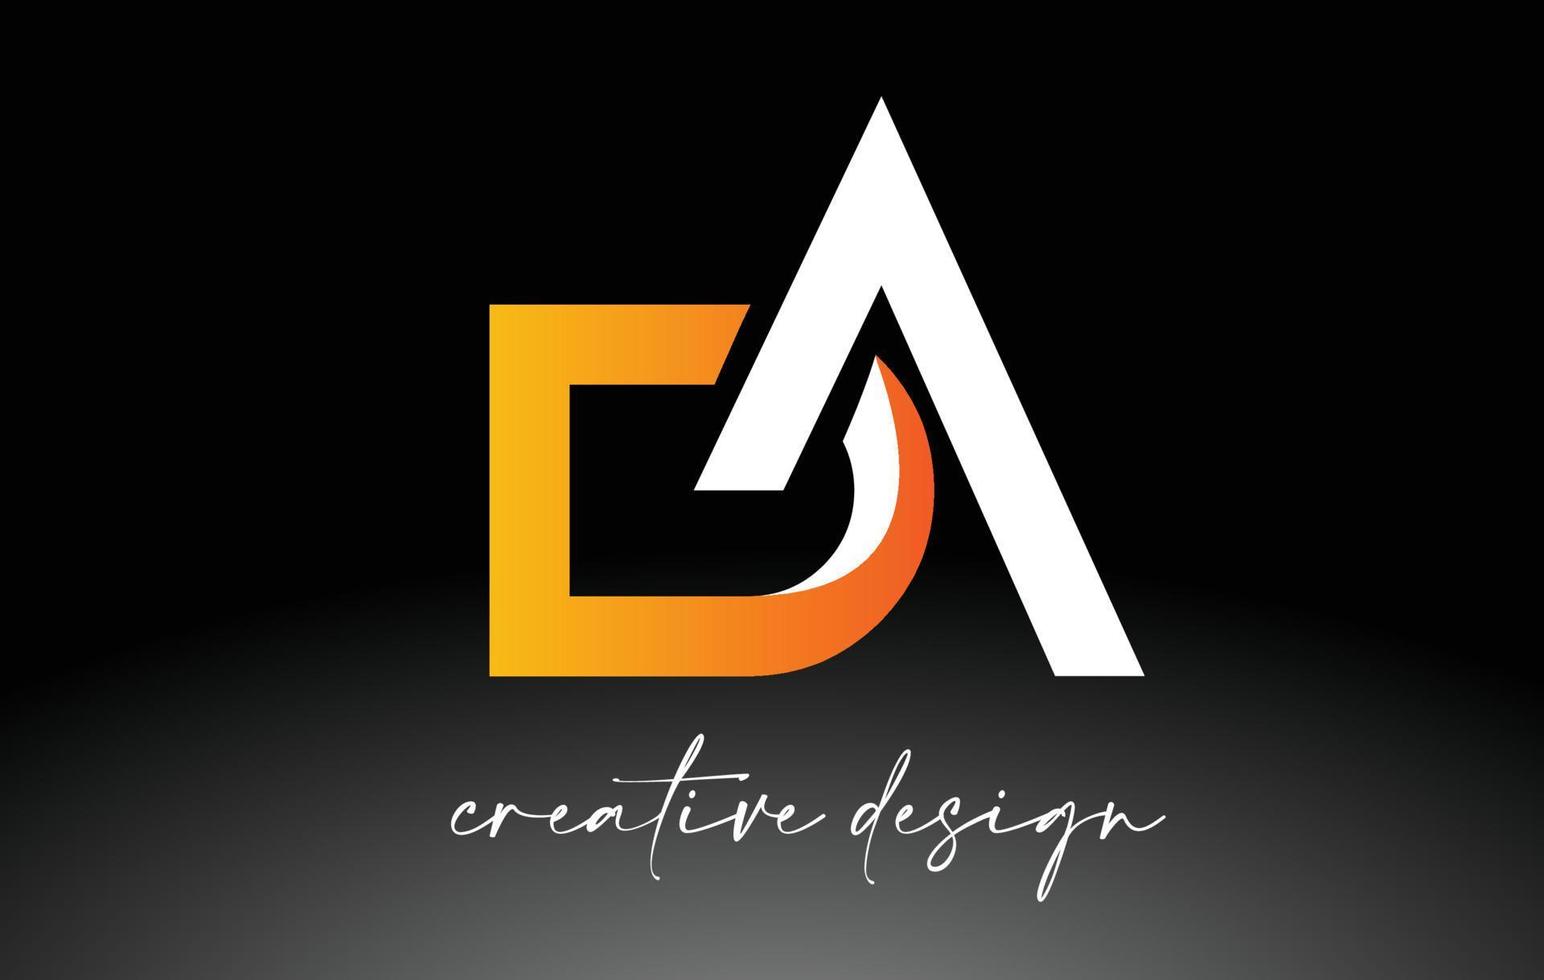 DA Letter Logo with White Golden Colors and Minimalist Design Icon Vector